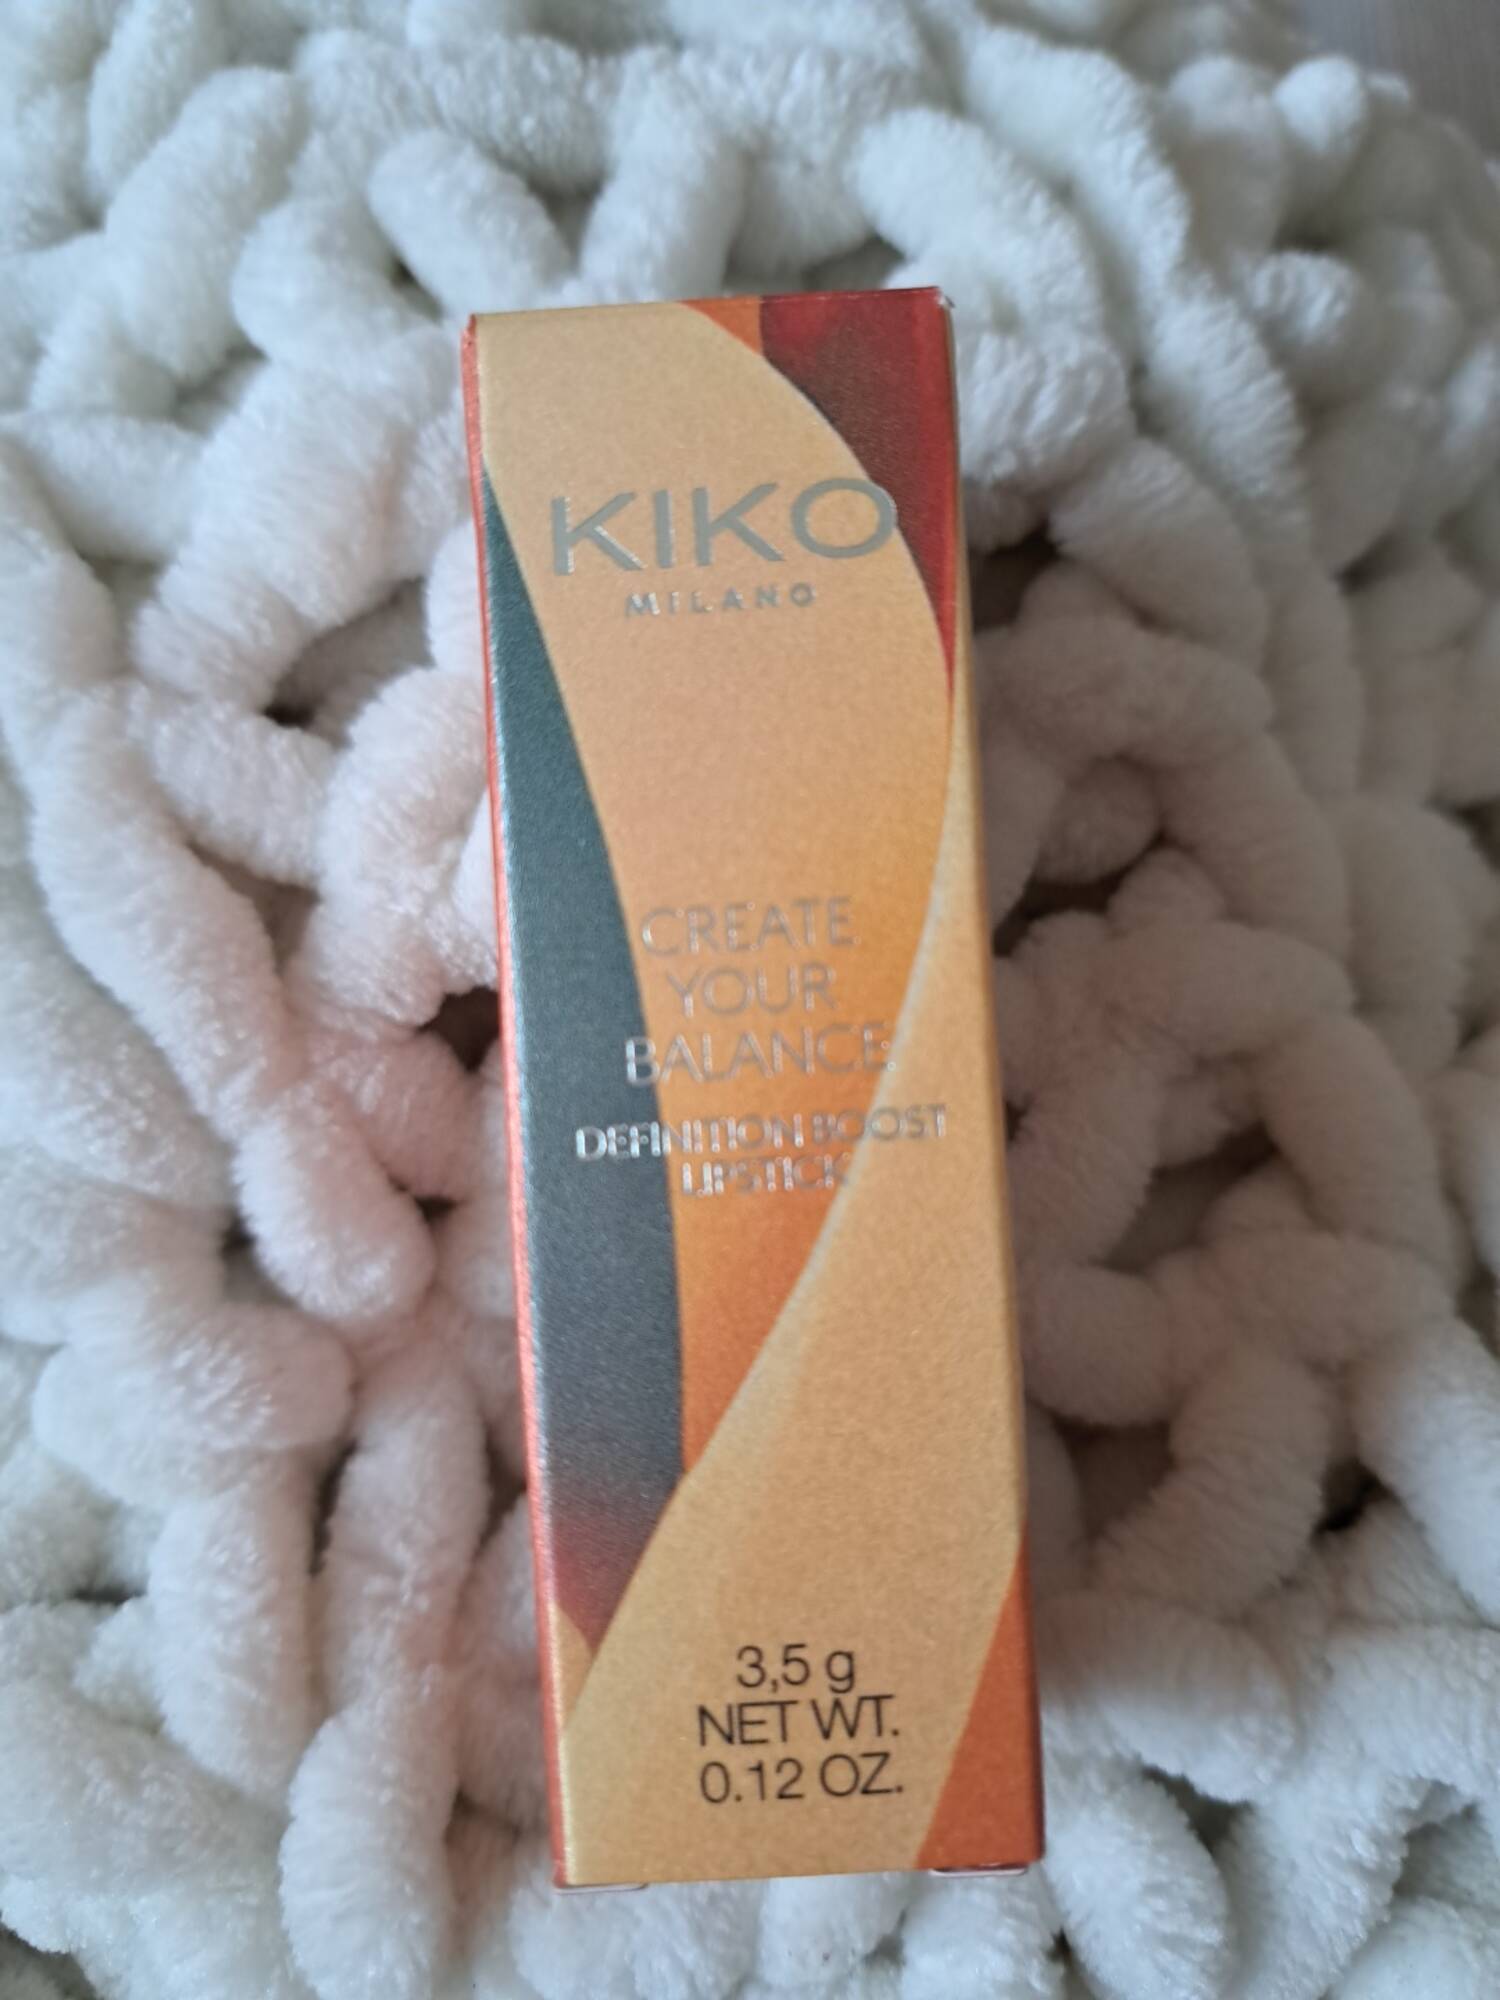 KIKO - Create your balance - définition boost lipstick